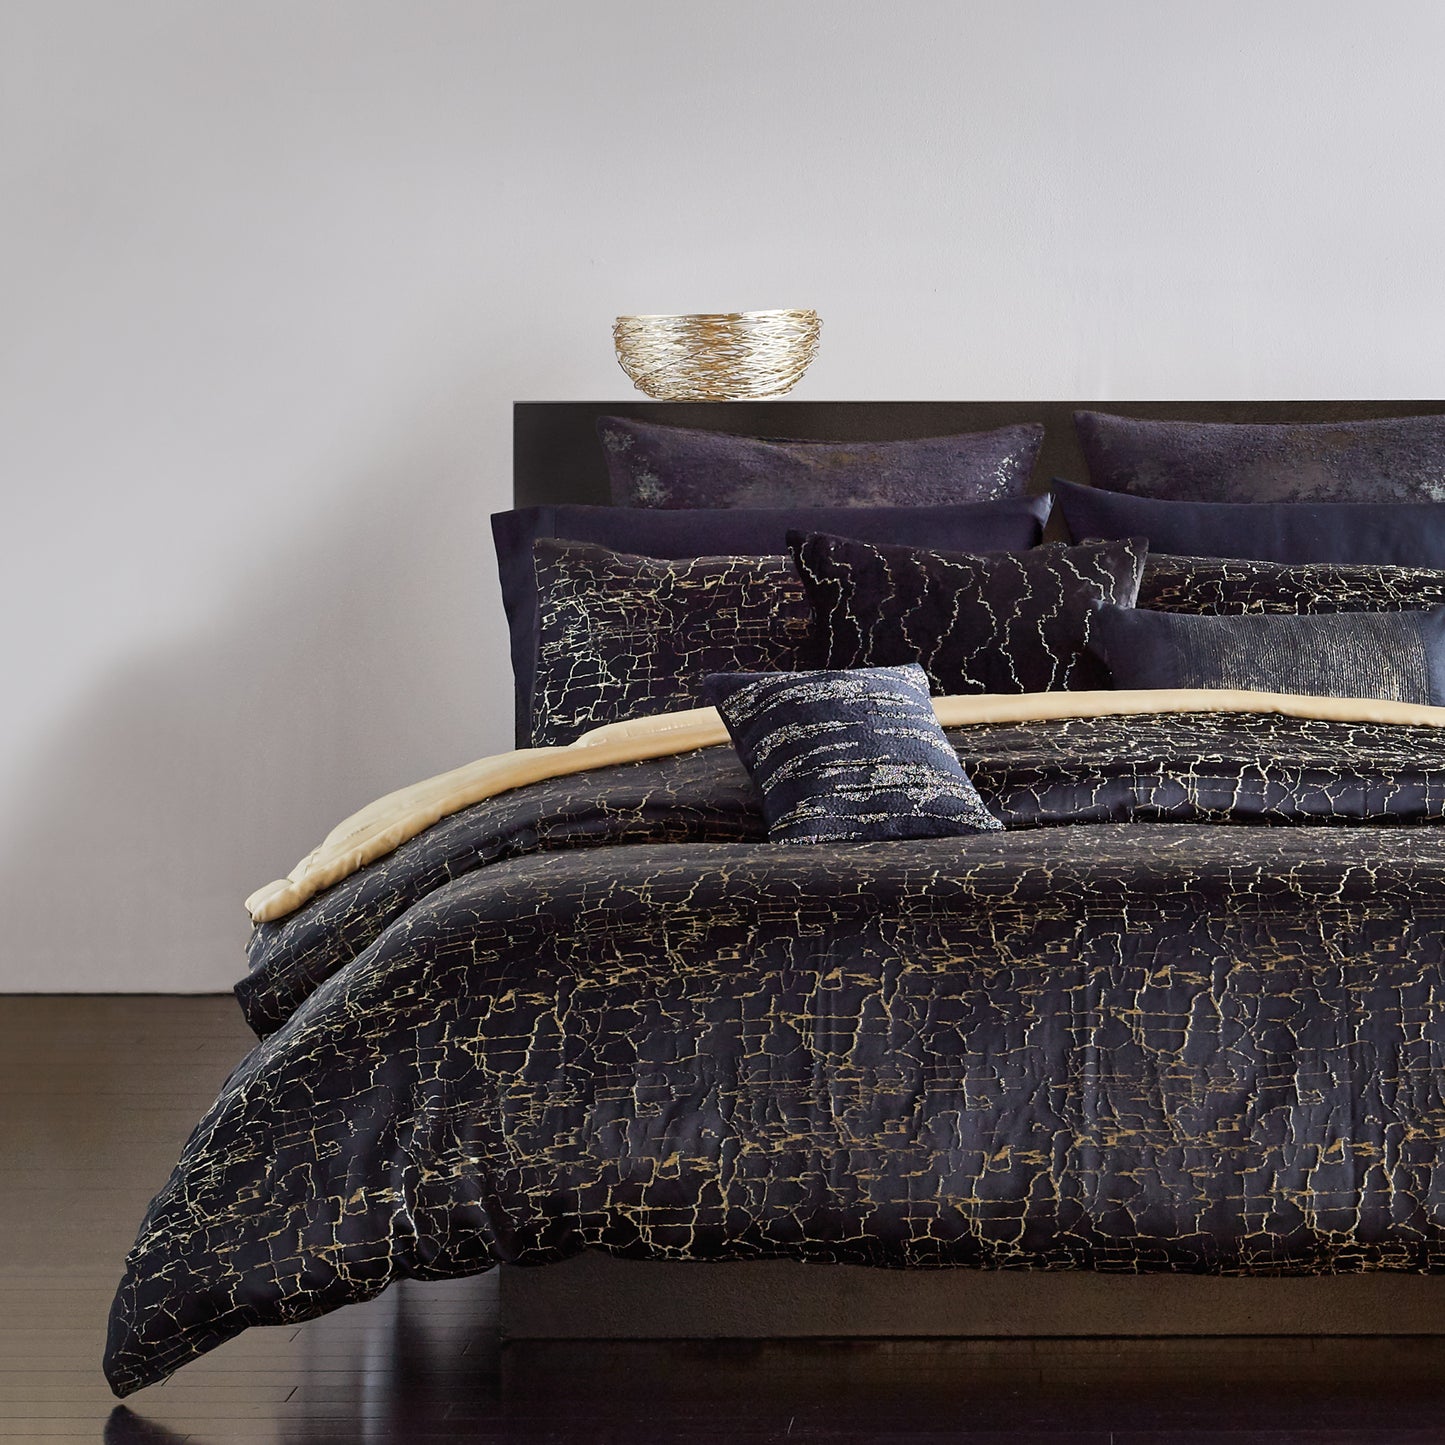 Donna Karan Black Onyx Bedding Collection Decorative Pillow